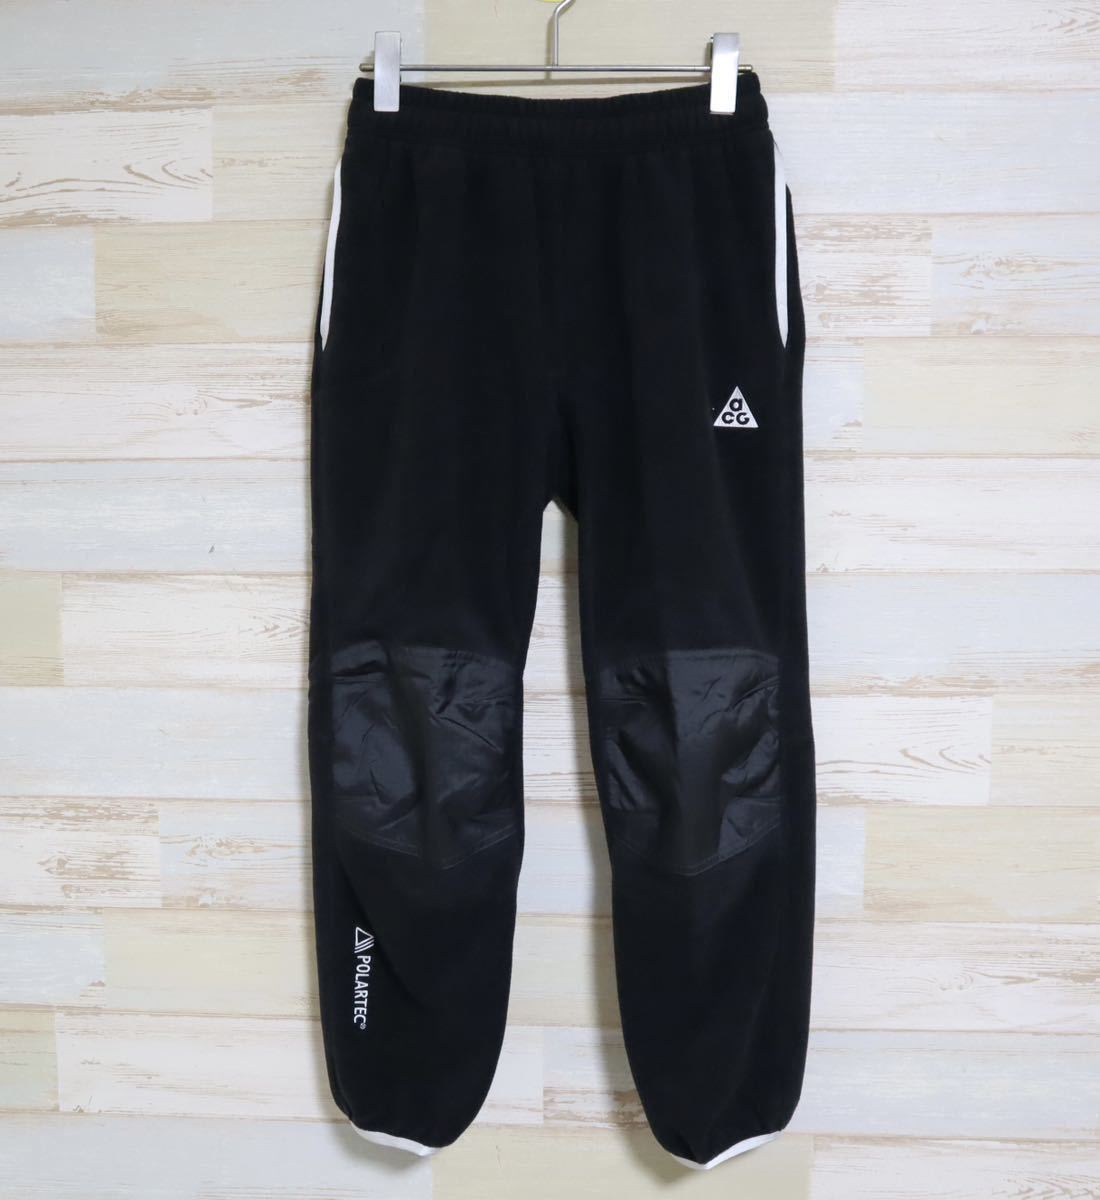  new goods regular price 9350 jpy 160.NIKE ACG Nike ACG Polartec Wolf Tree Junior pants fleece pants black black 